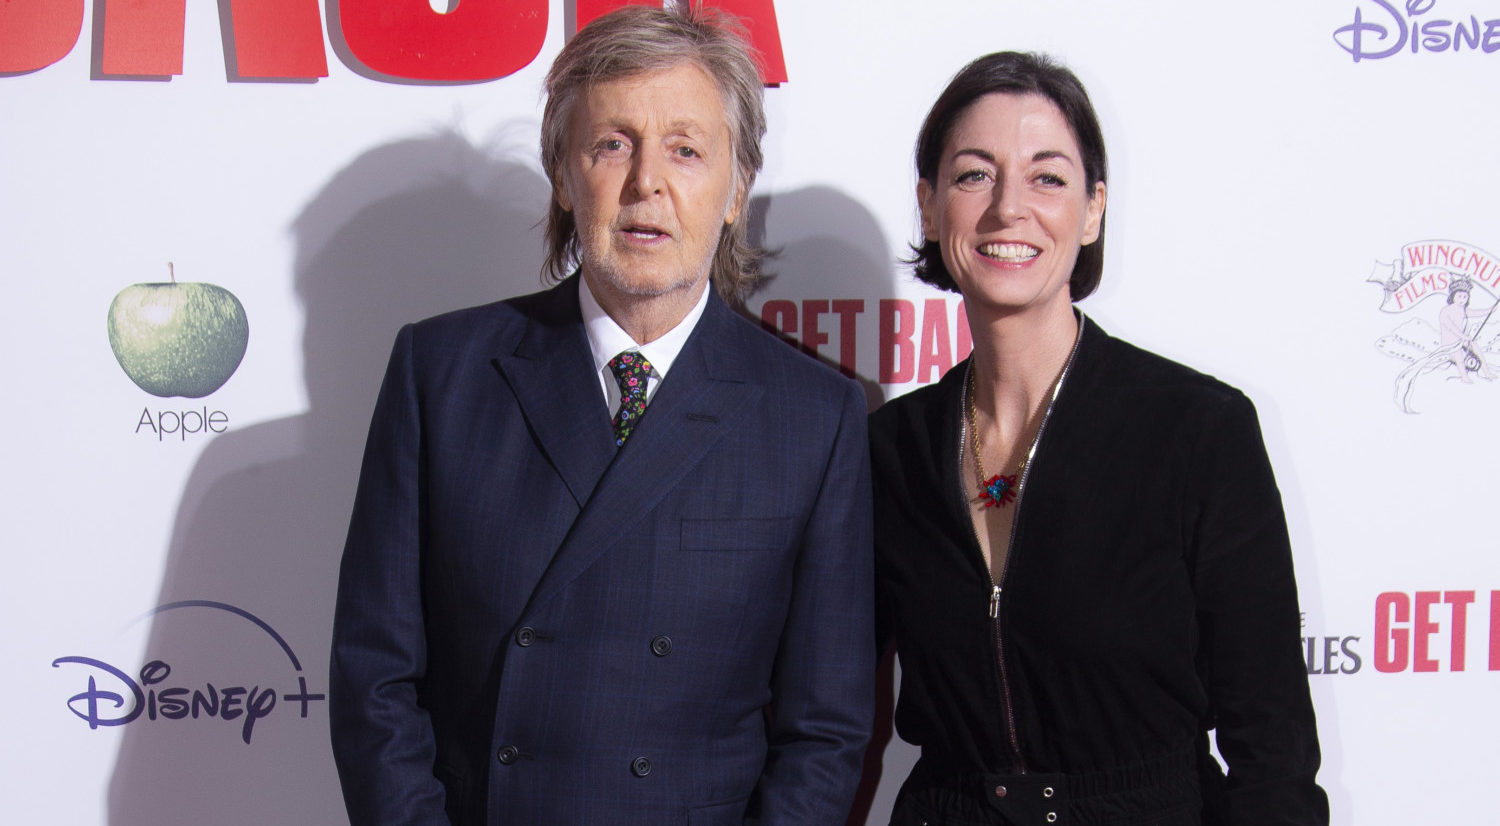 Sir Paul McCartney, Mary McCartney pose at "Get Back" premiere.